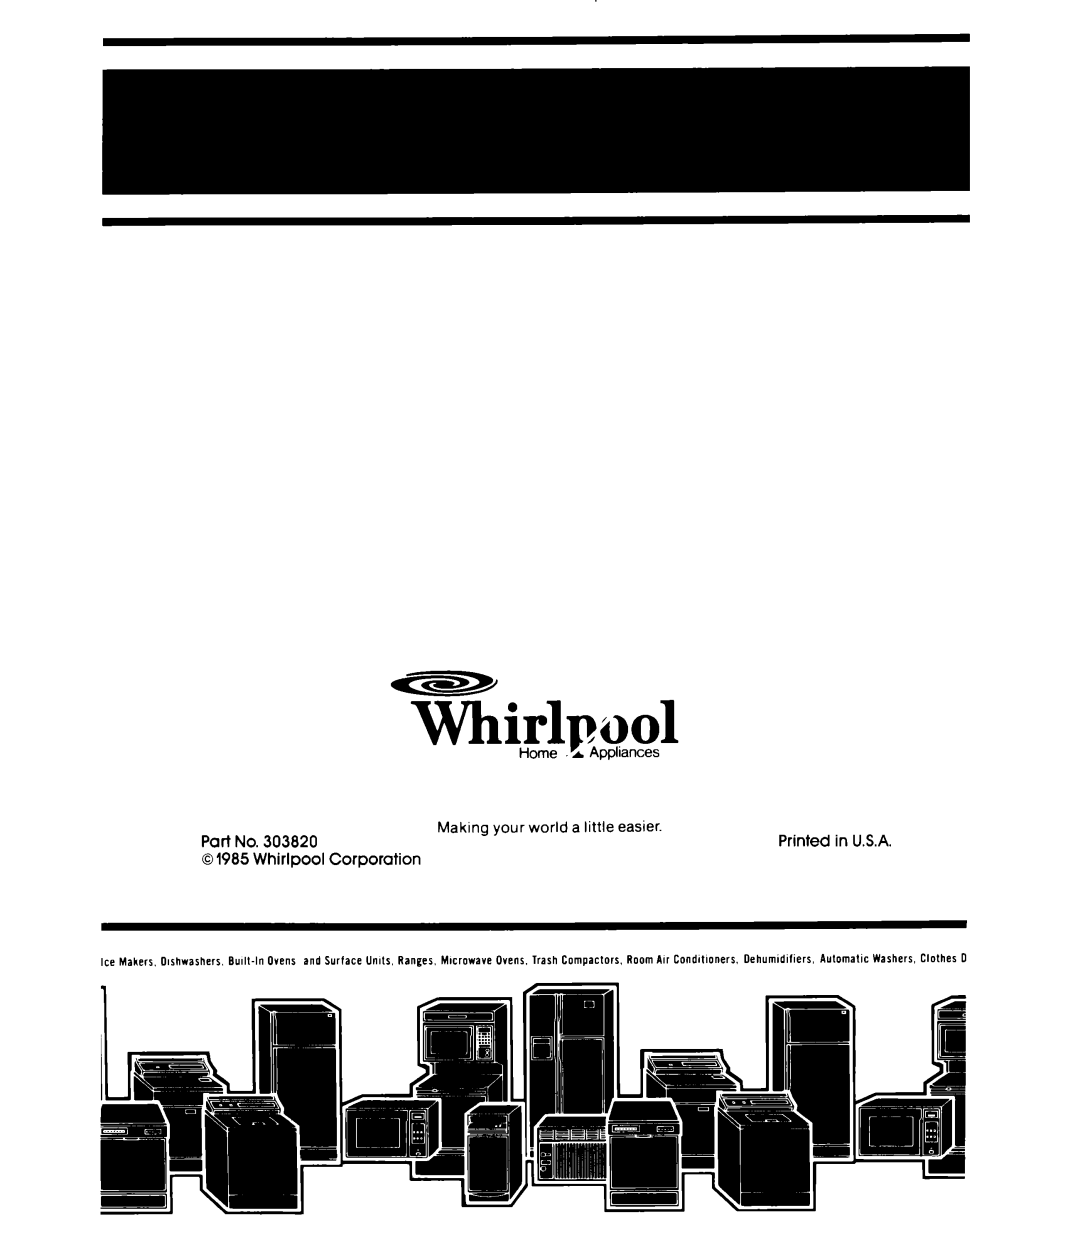 Whirlpool DU4003XL manual Whirlmol, 0 1985 Whirlpool, Corporation 